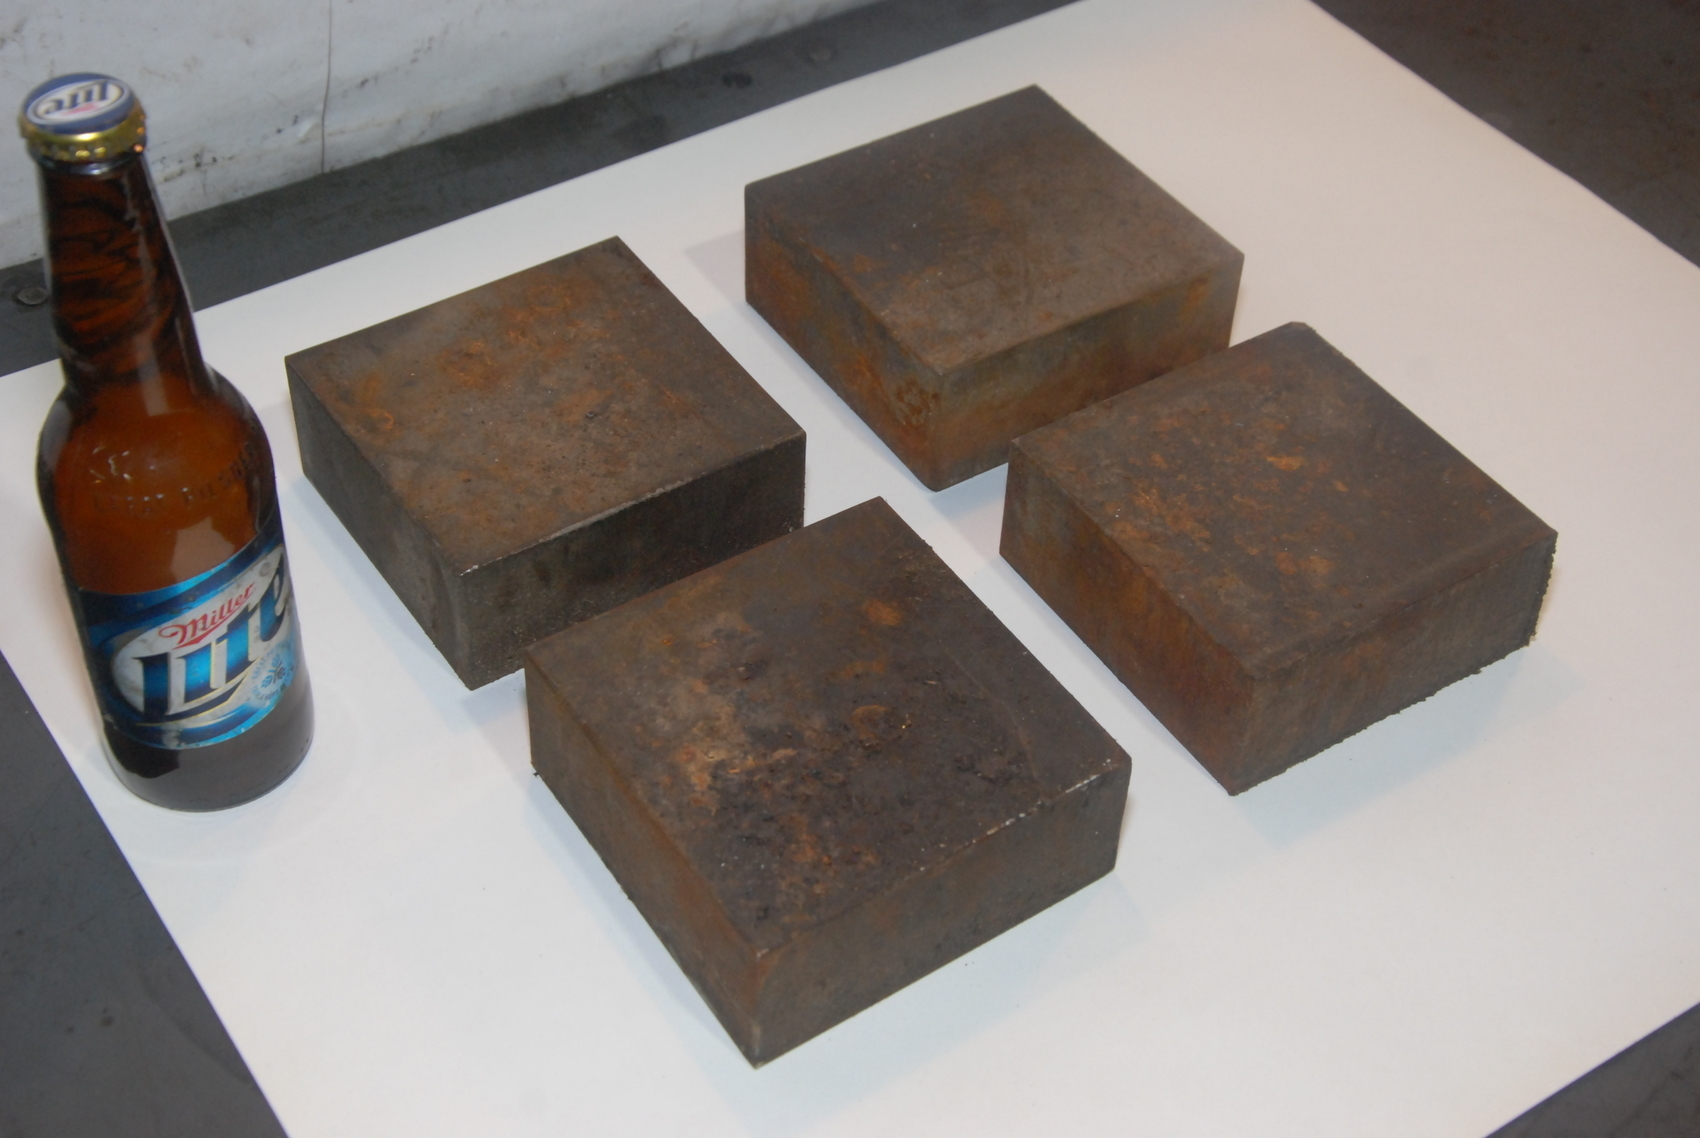 Lot of 4 heavy duty machine feet steel bar foot blacksmith anvil;56lbs